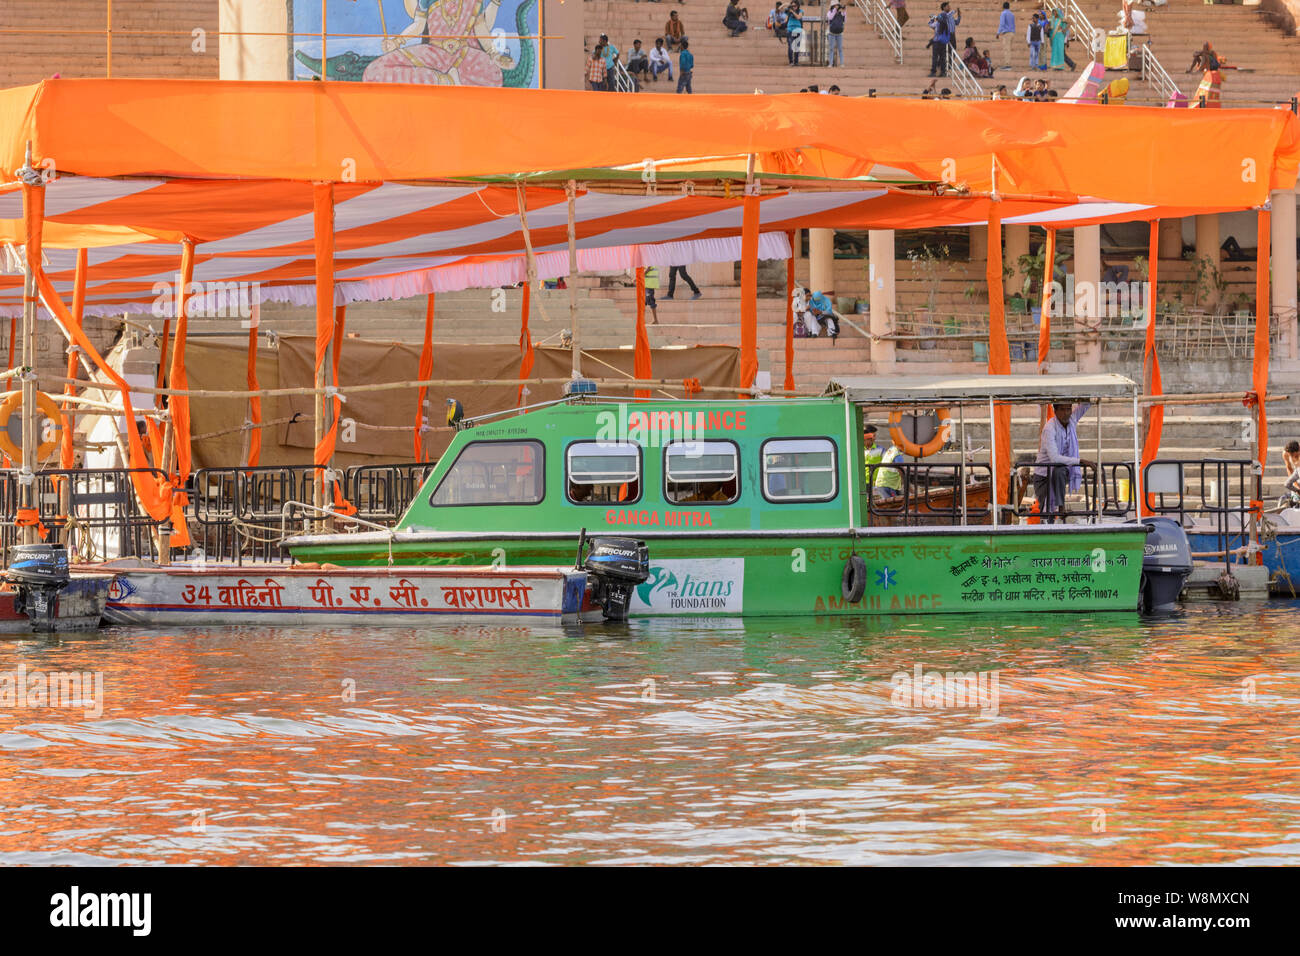 Ambulance boat on the River Ganges in Varanasi, Uttar Pradesh, India, South Asia. Varanasi is also known as Benares, Banaras and Kashi. Stock Photo